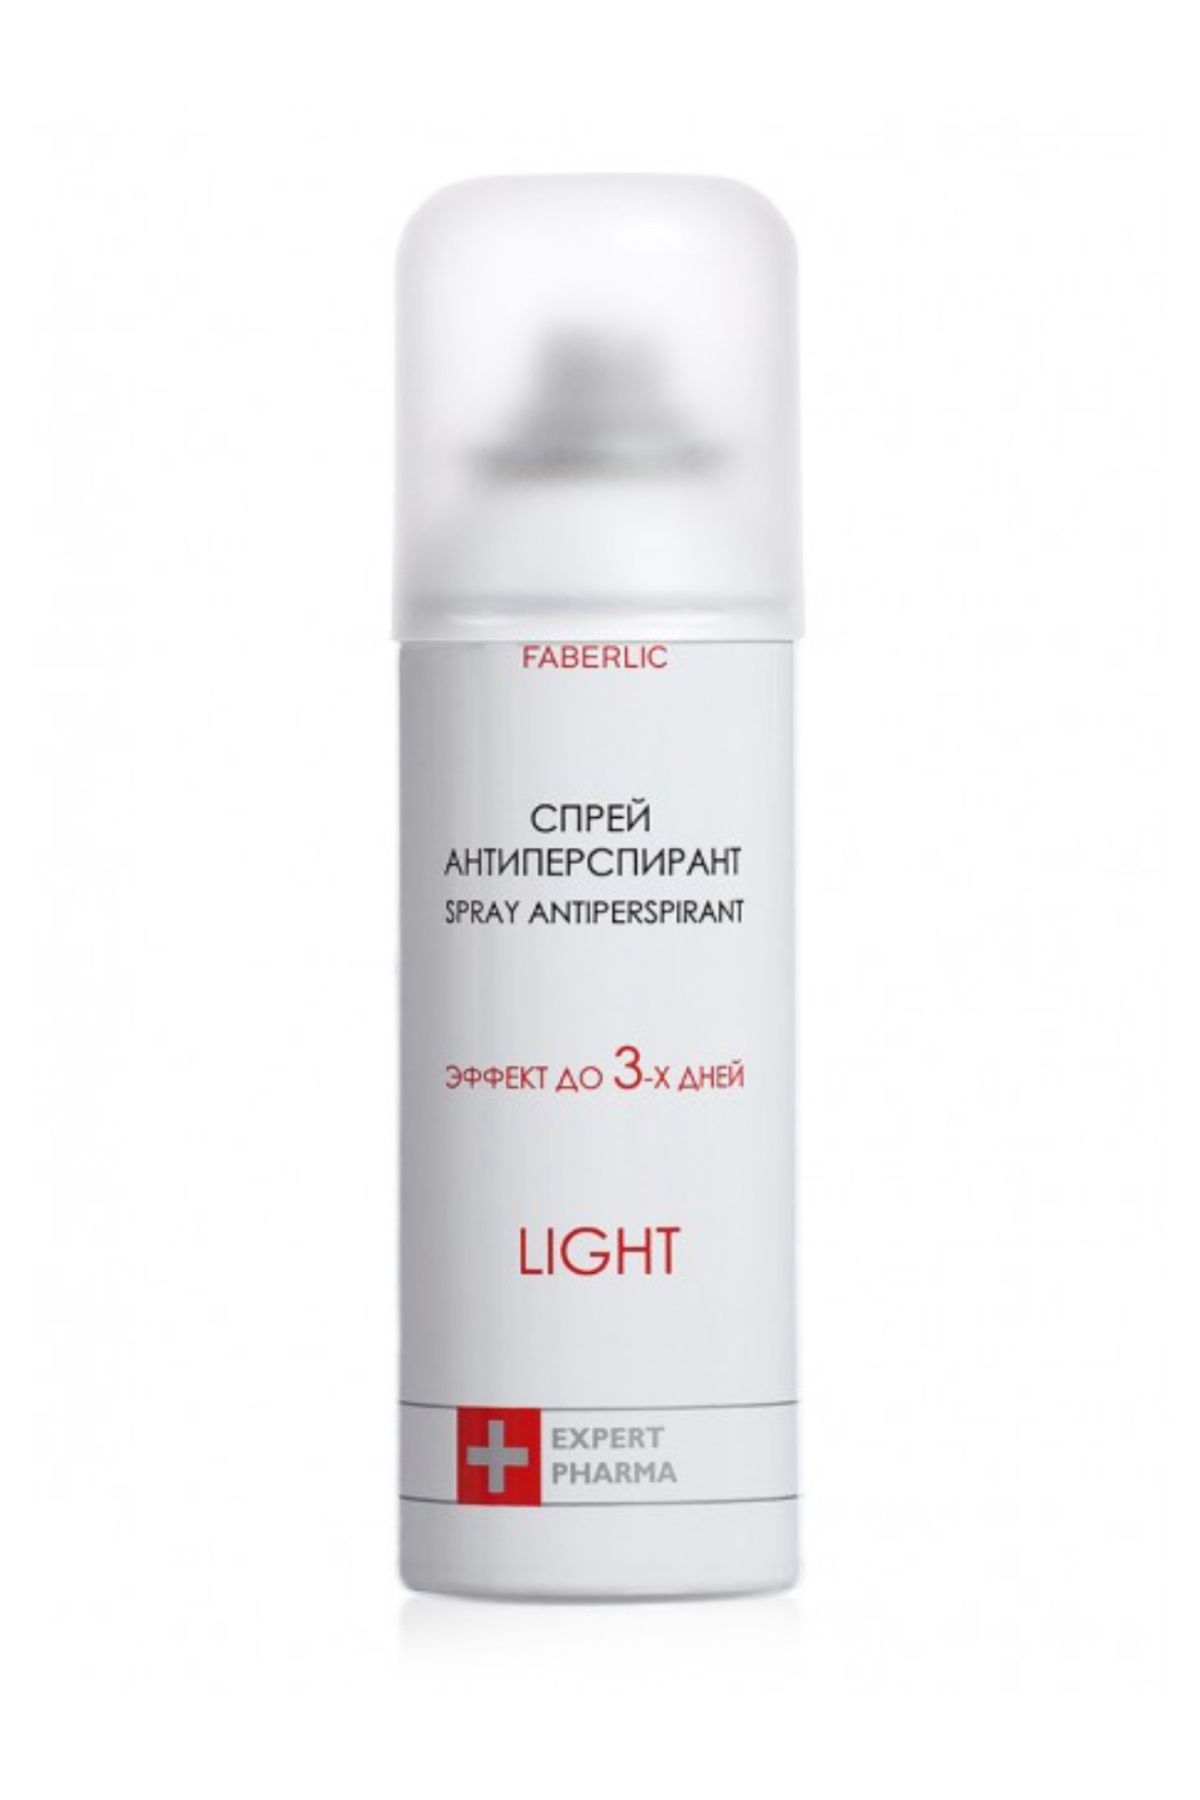 Faberlic Light Antiperspirant Sprey Deodorant